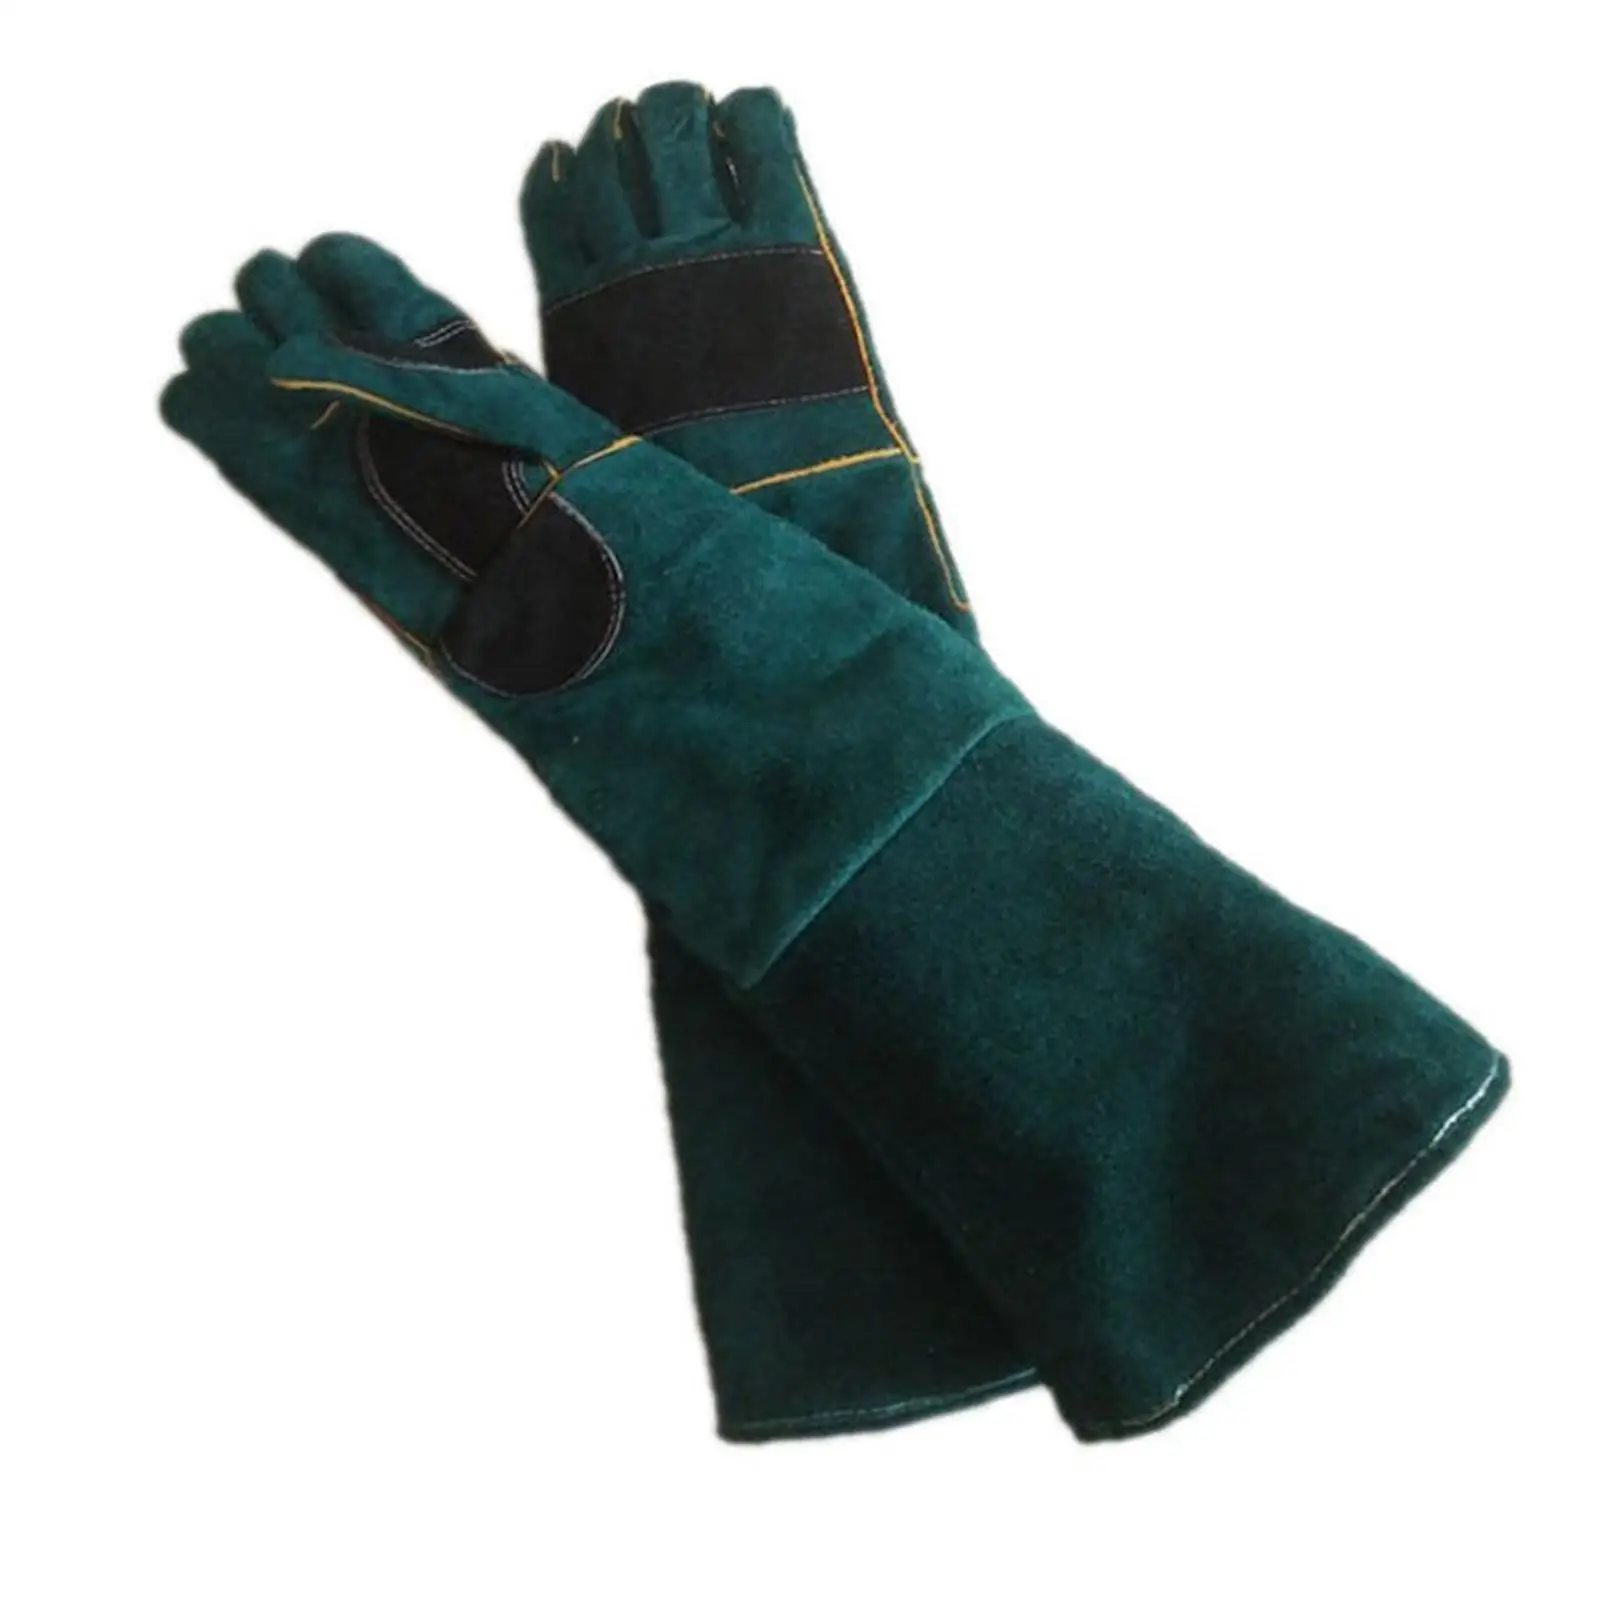 Animal Handling Gloves Bite Resistant Multipurpose Scratch Resistant Portable Durable Protective Gloves for Dogs Birds Gardening